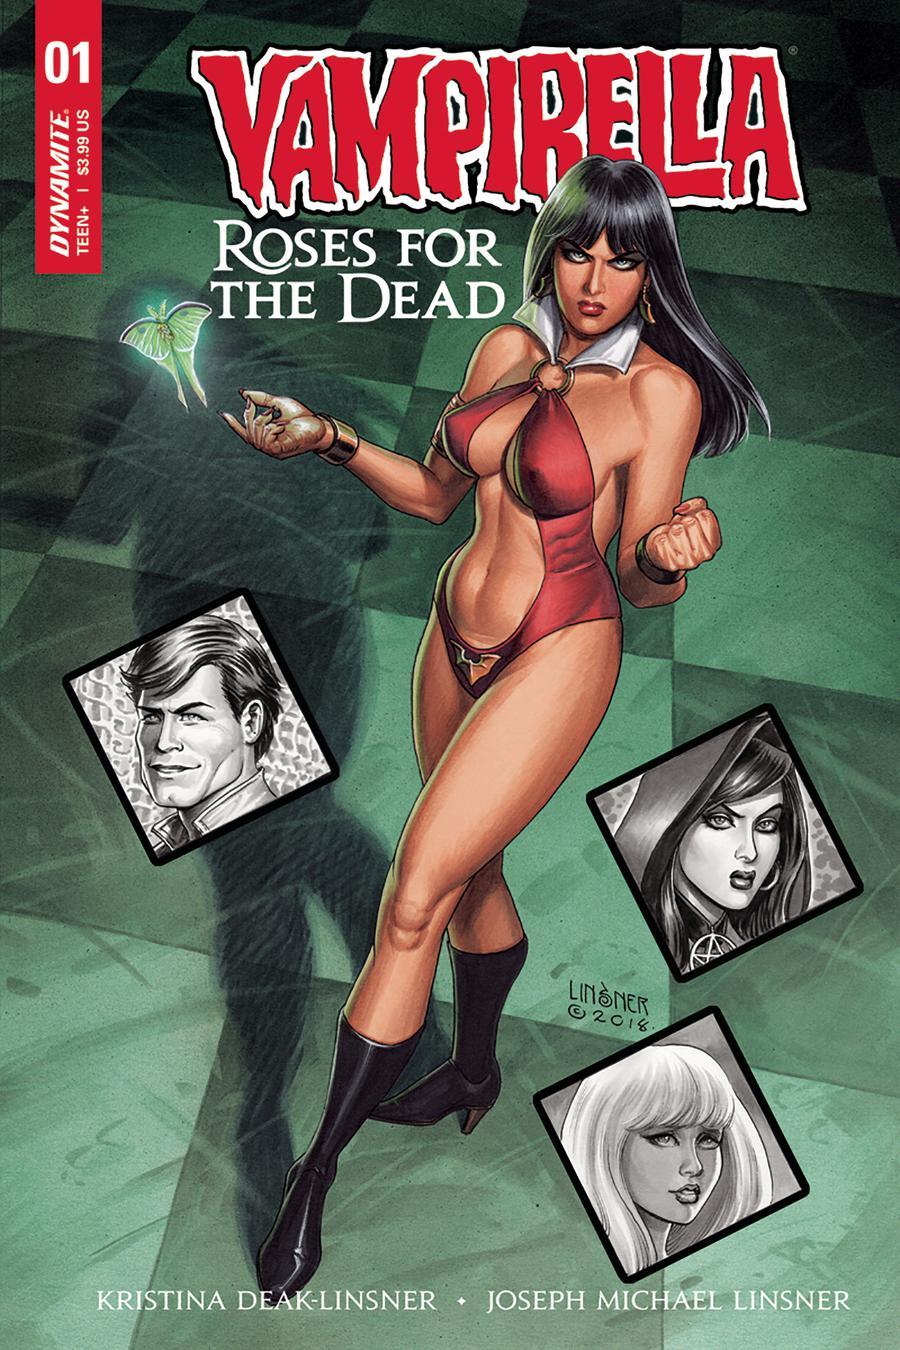 Vampirella Roses For The Dead Vol. 1 #1